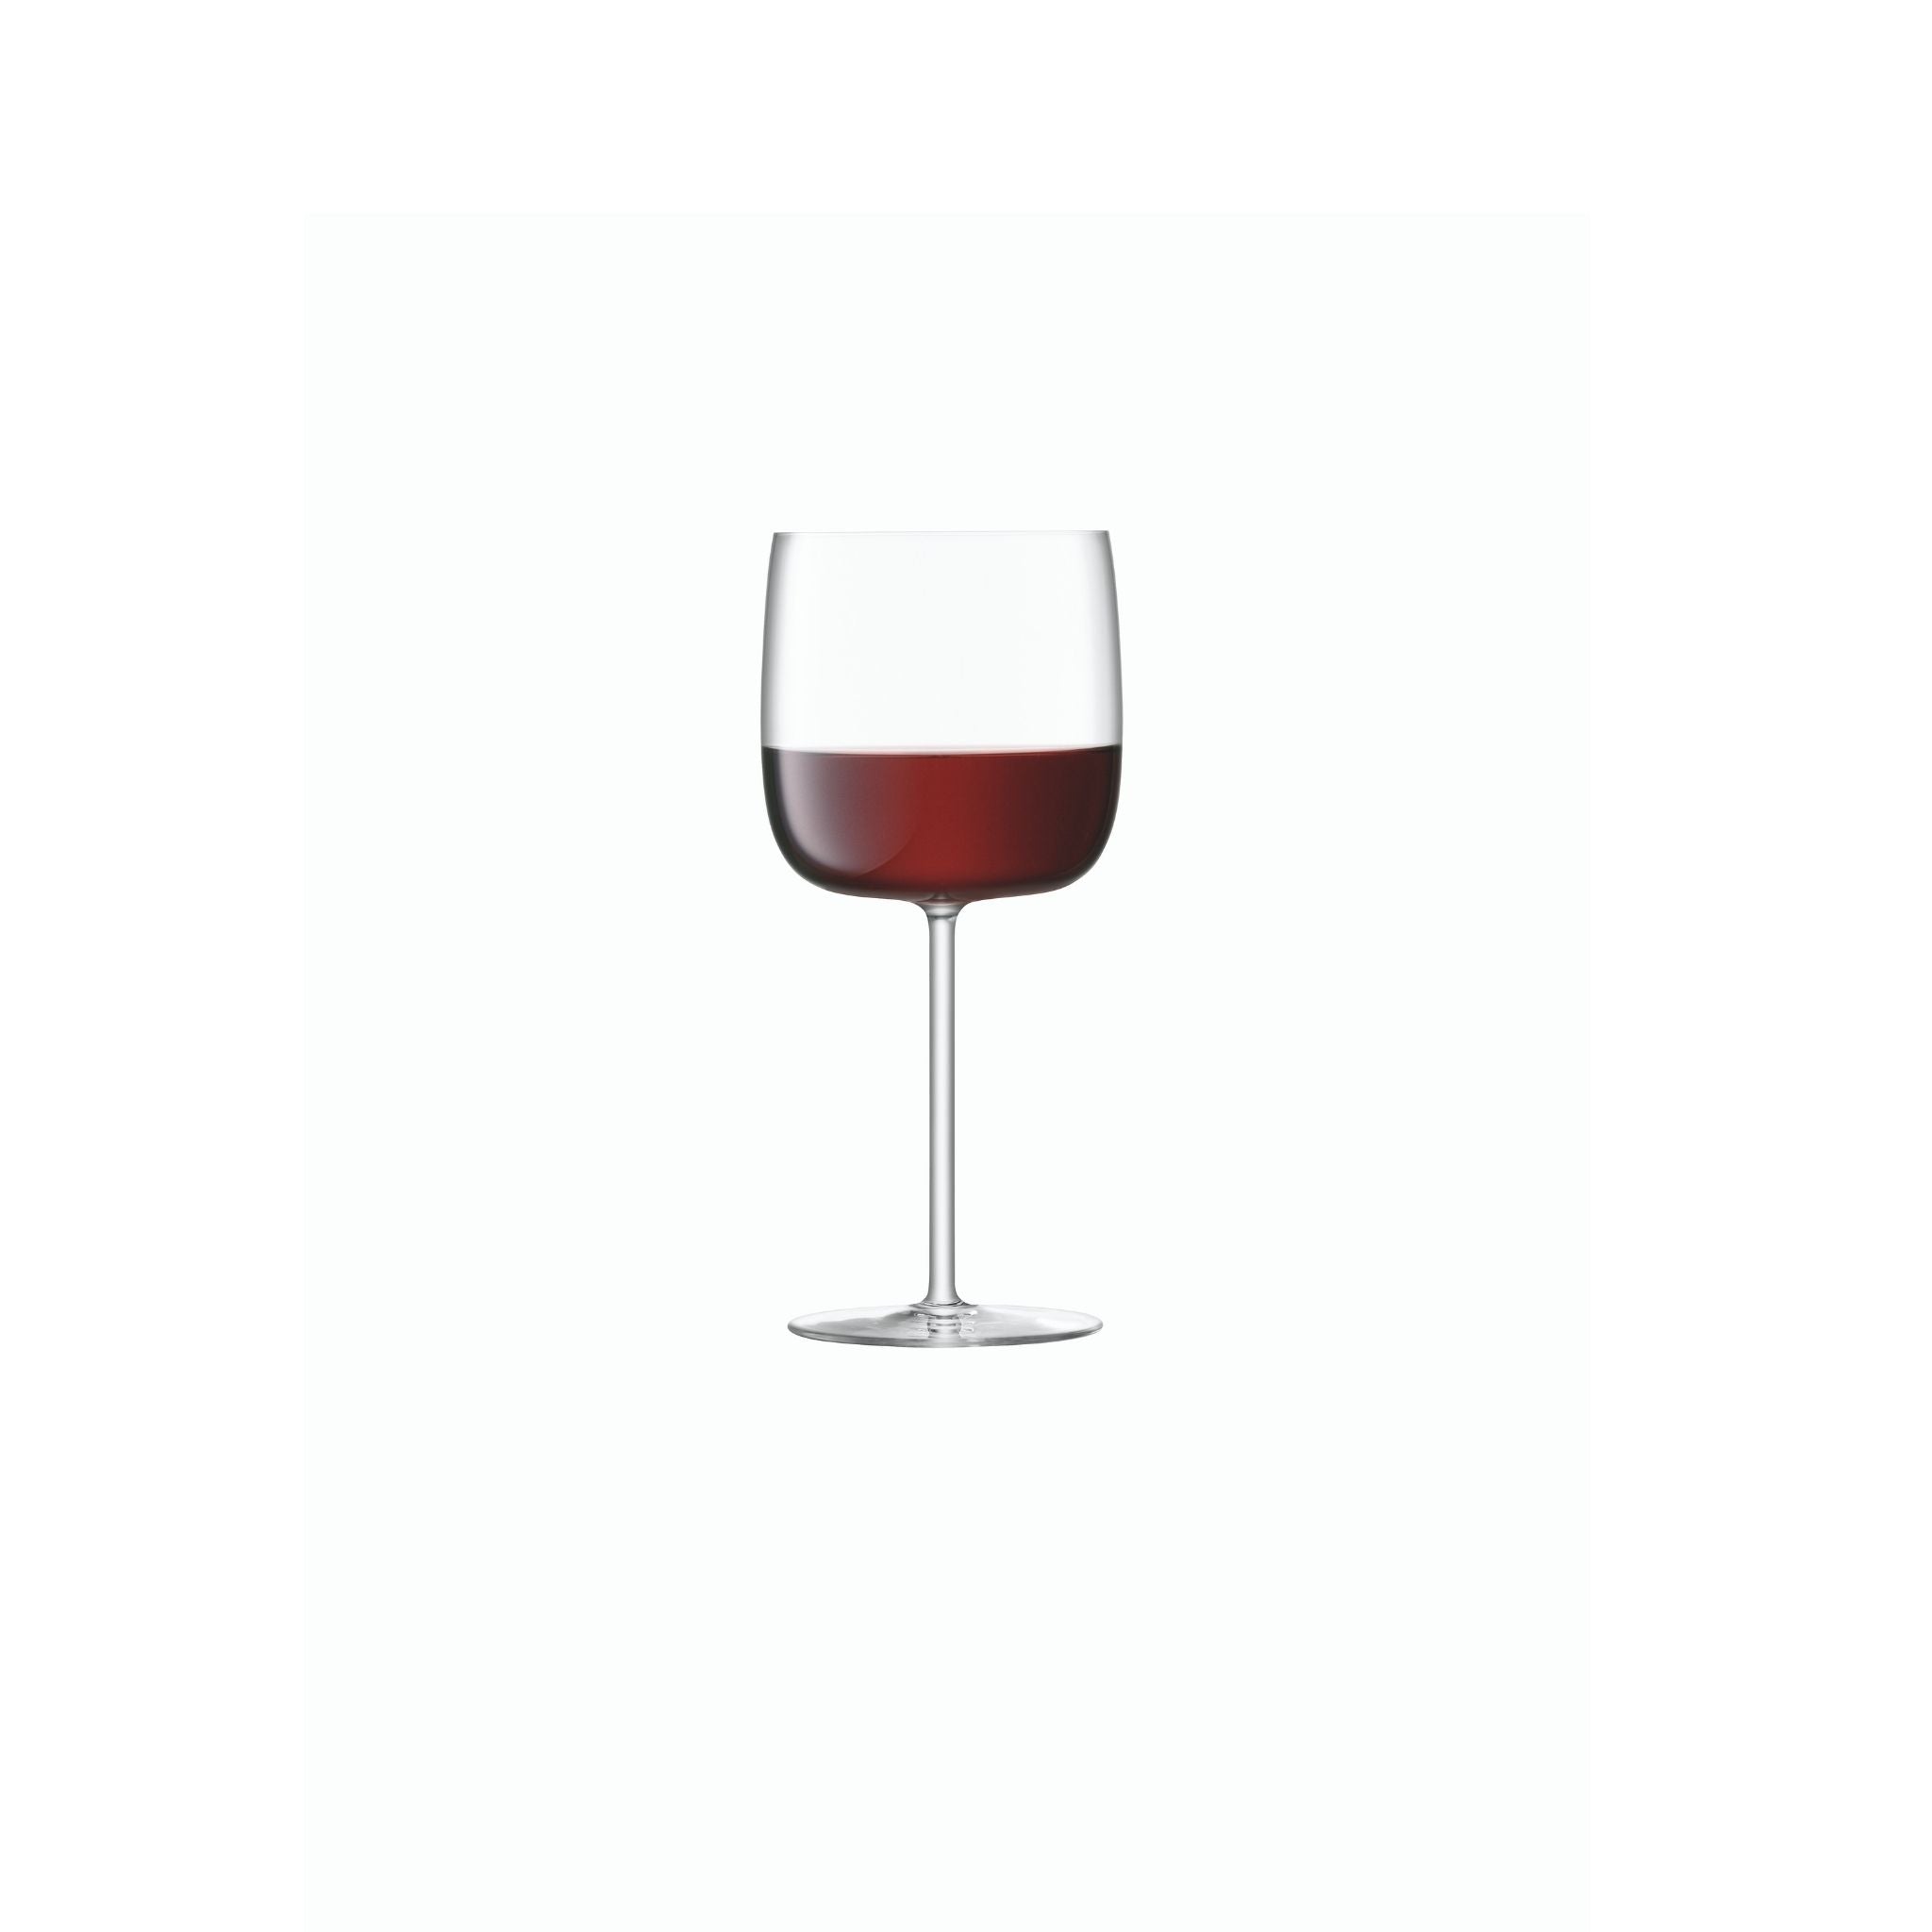 Borough Wine Glass, Set of 4